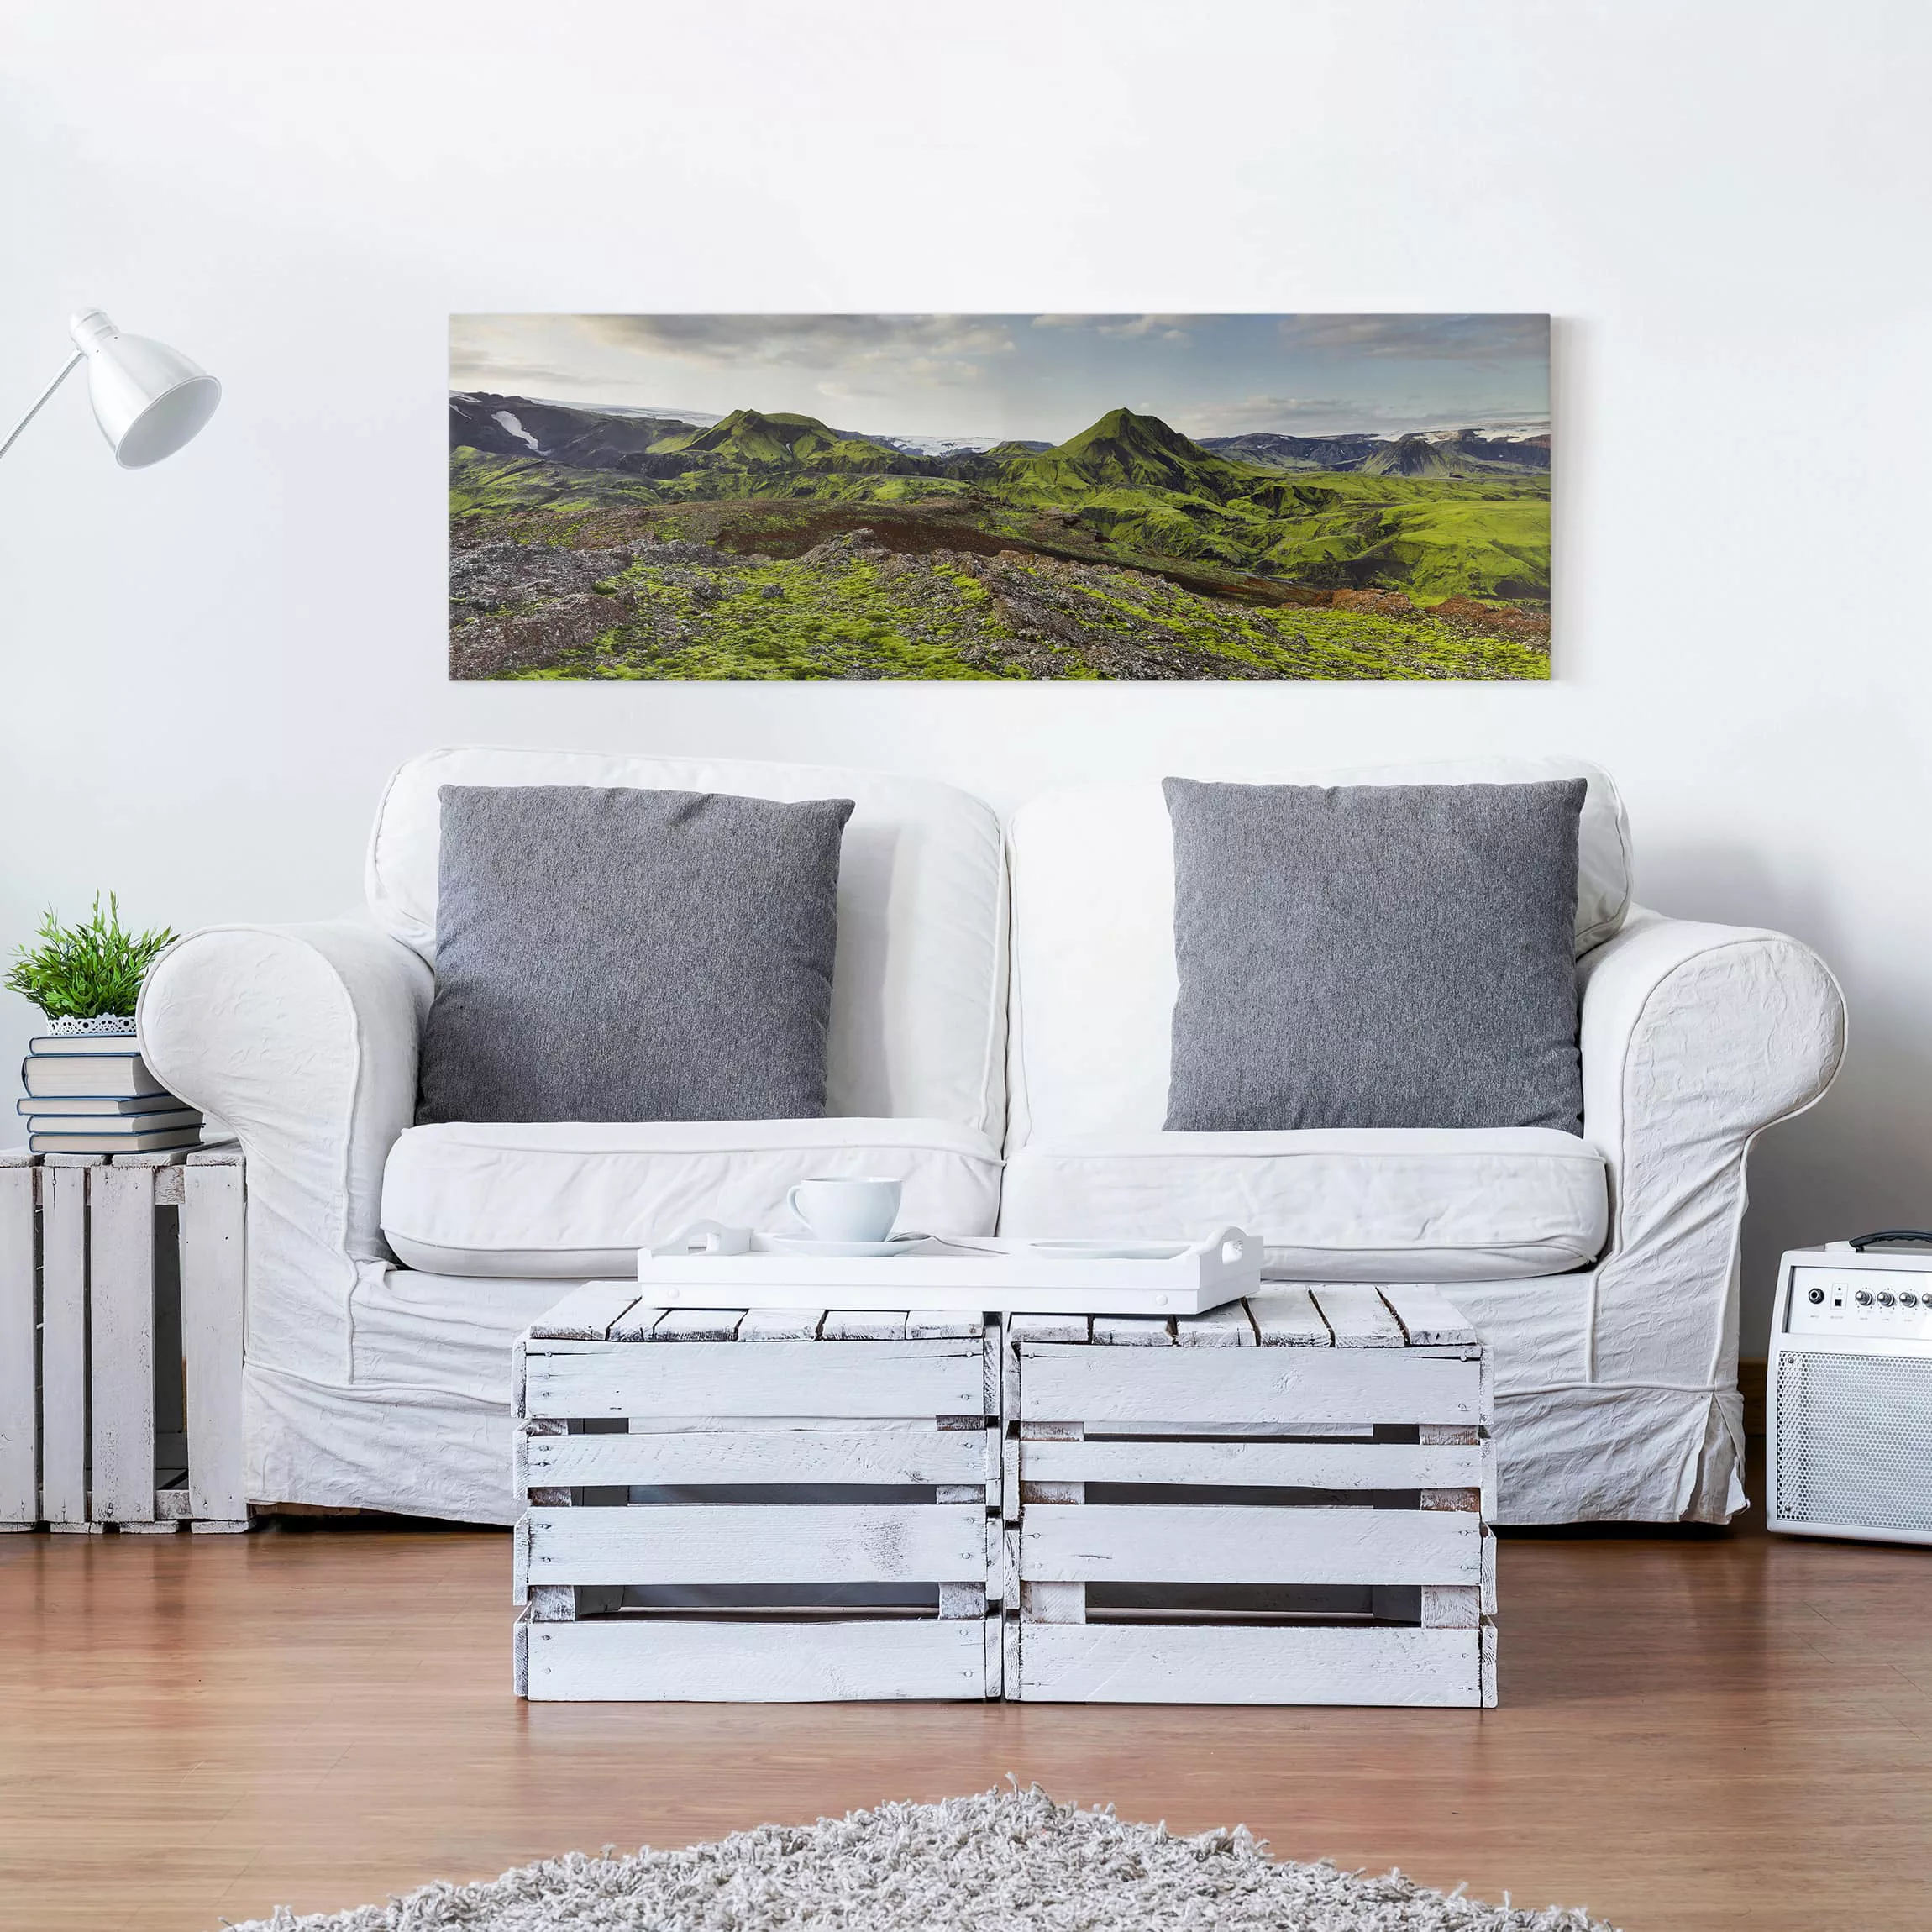 Leinwandbild Natur & Landschaft - Panorama Rjupnafell Island günstig online kaufen